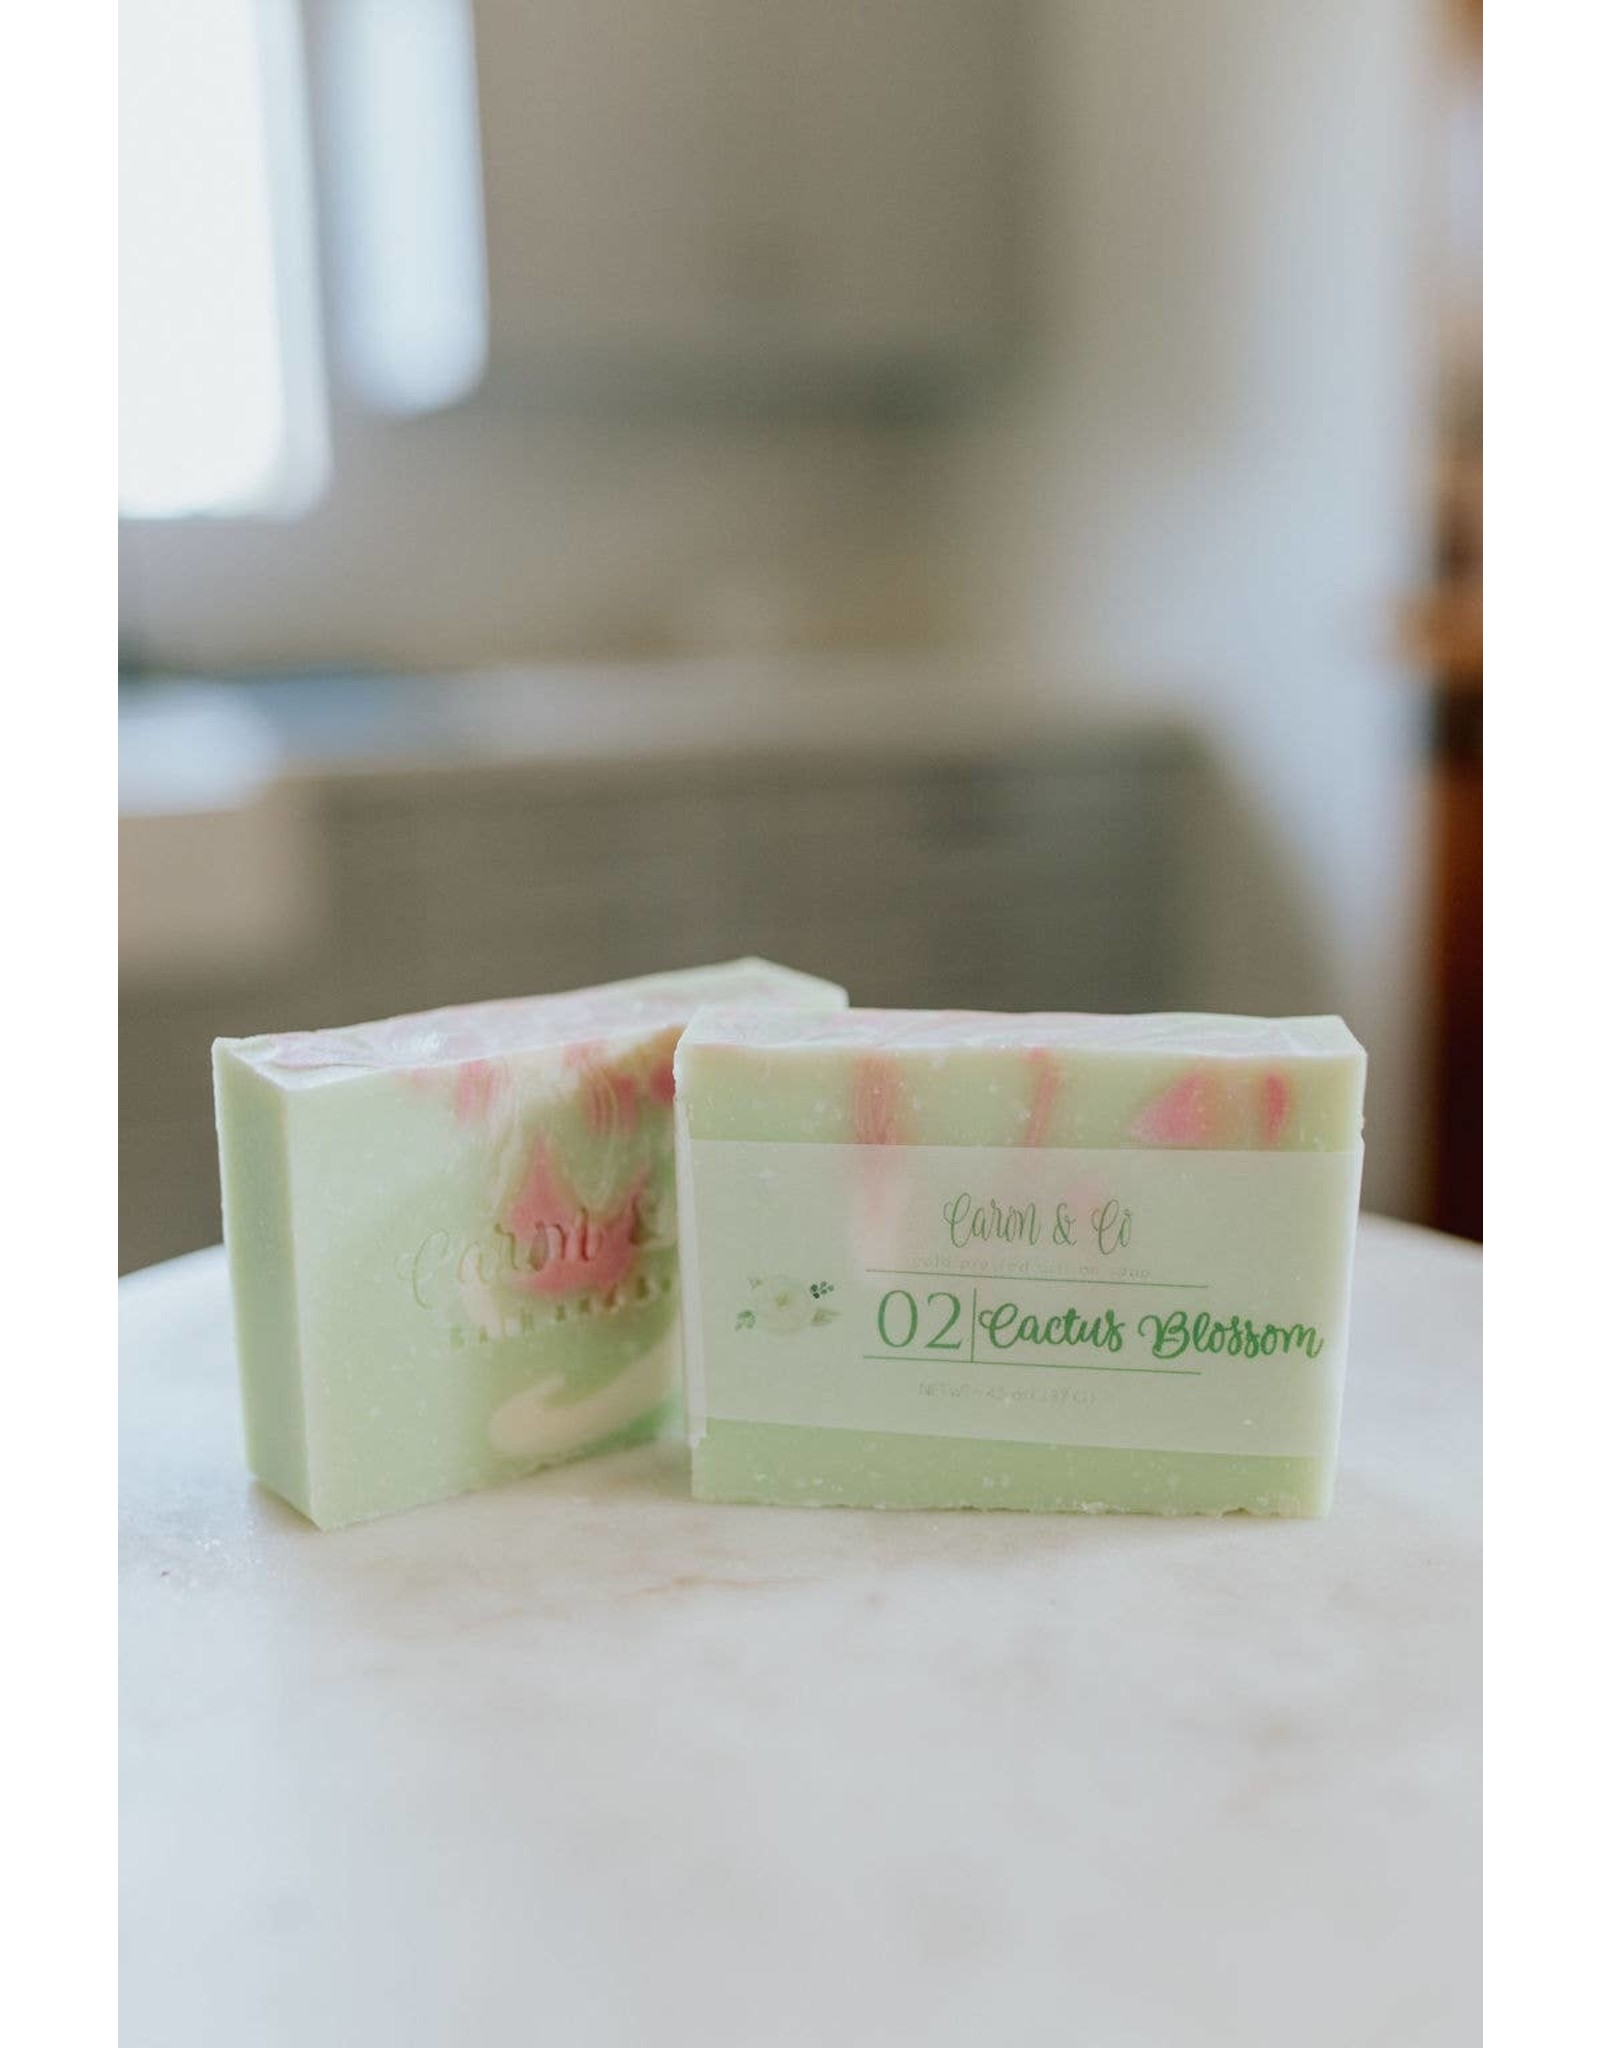 Caron & Co Bath and Body Cactus Blossom Soap - Slice